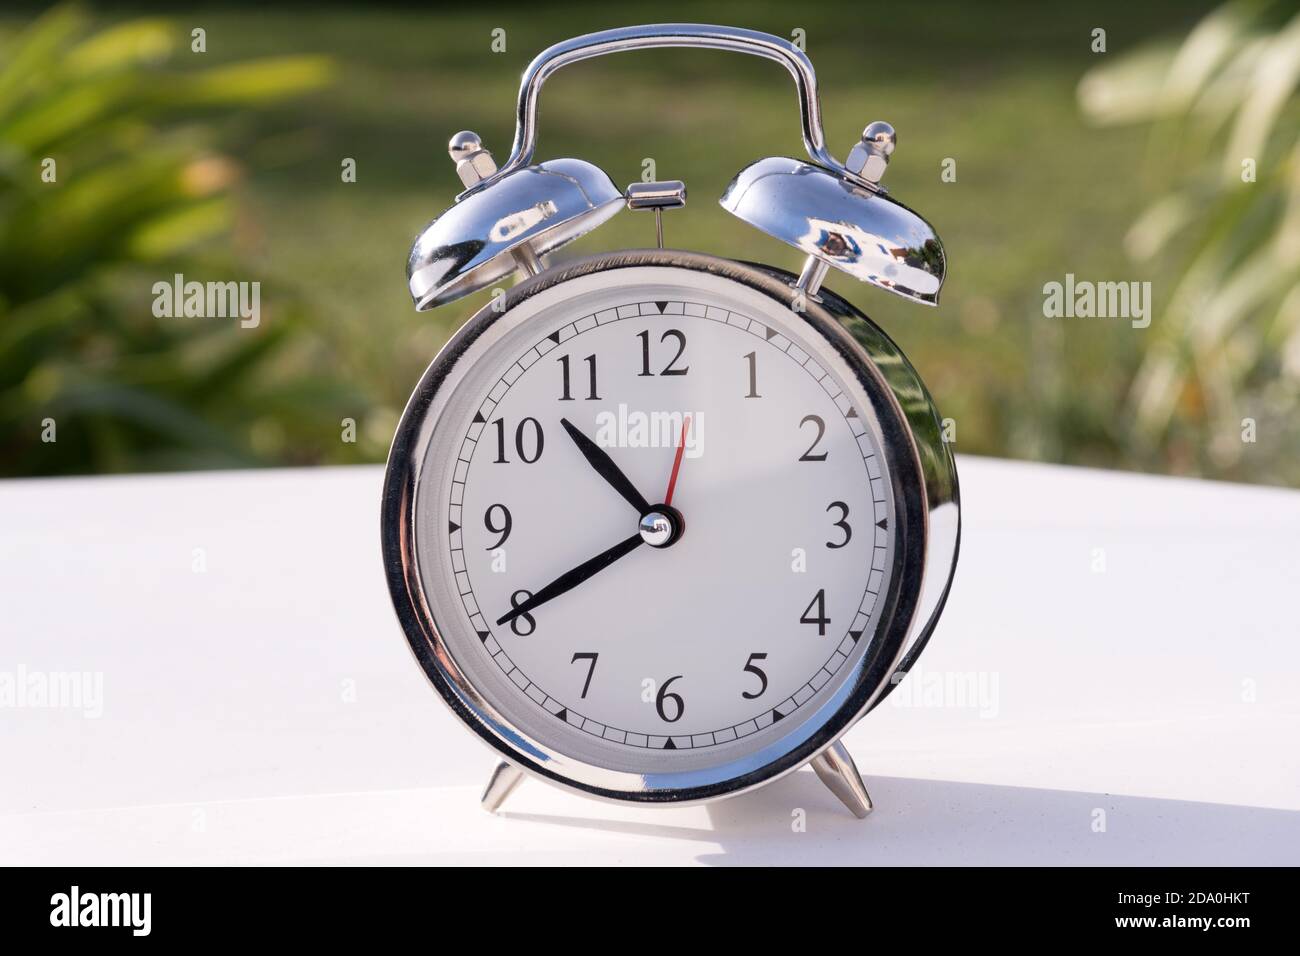 An alarm clock on a garden table Stock Photo